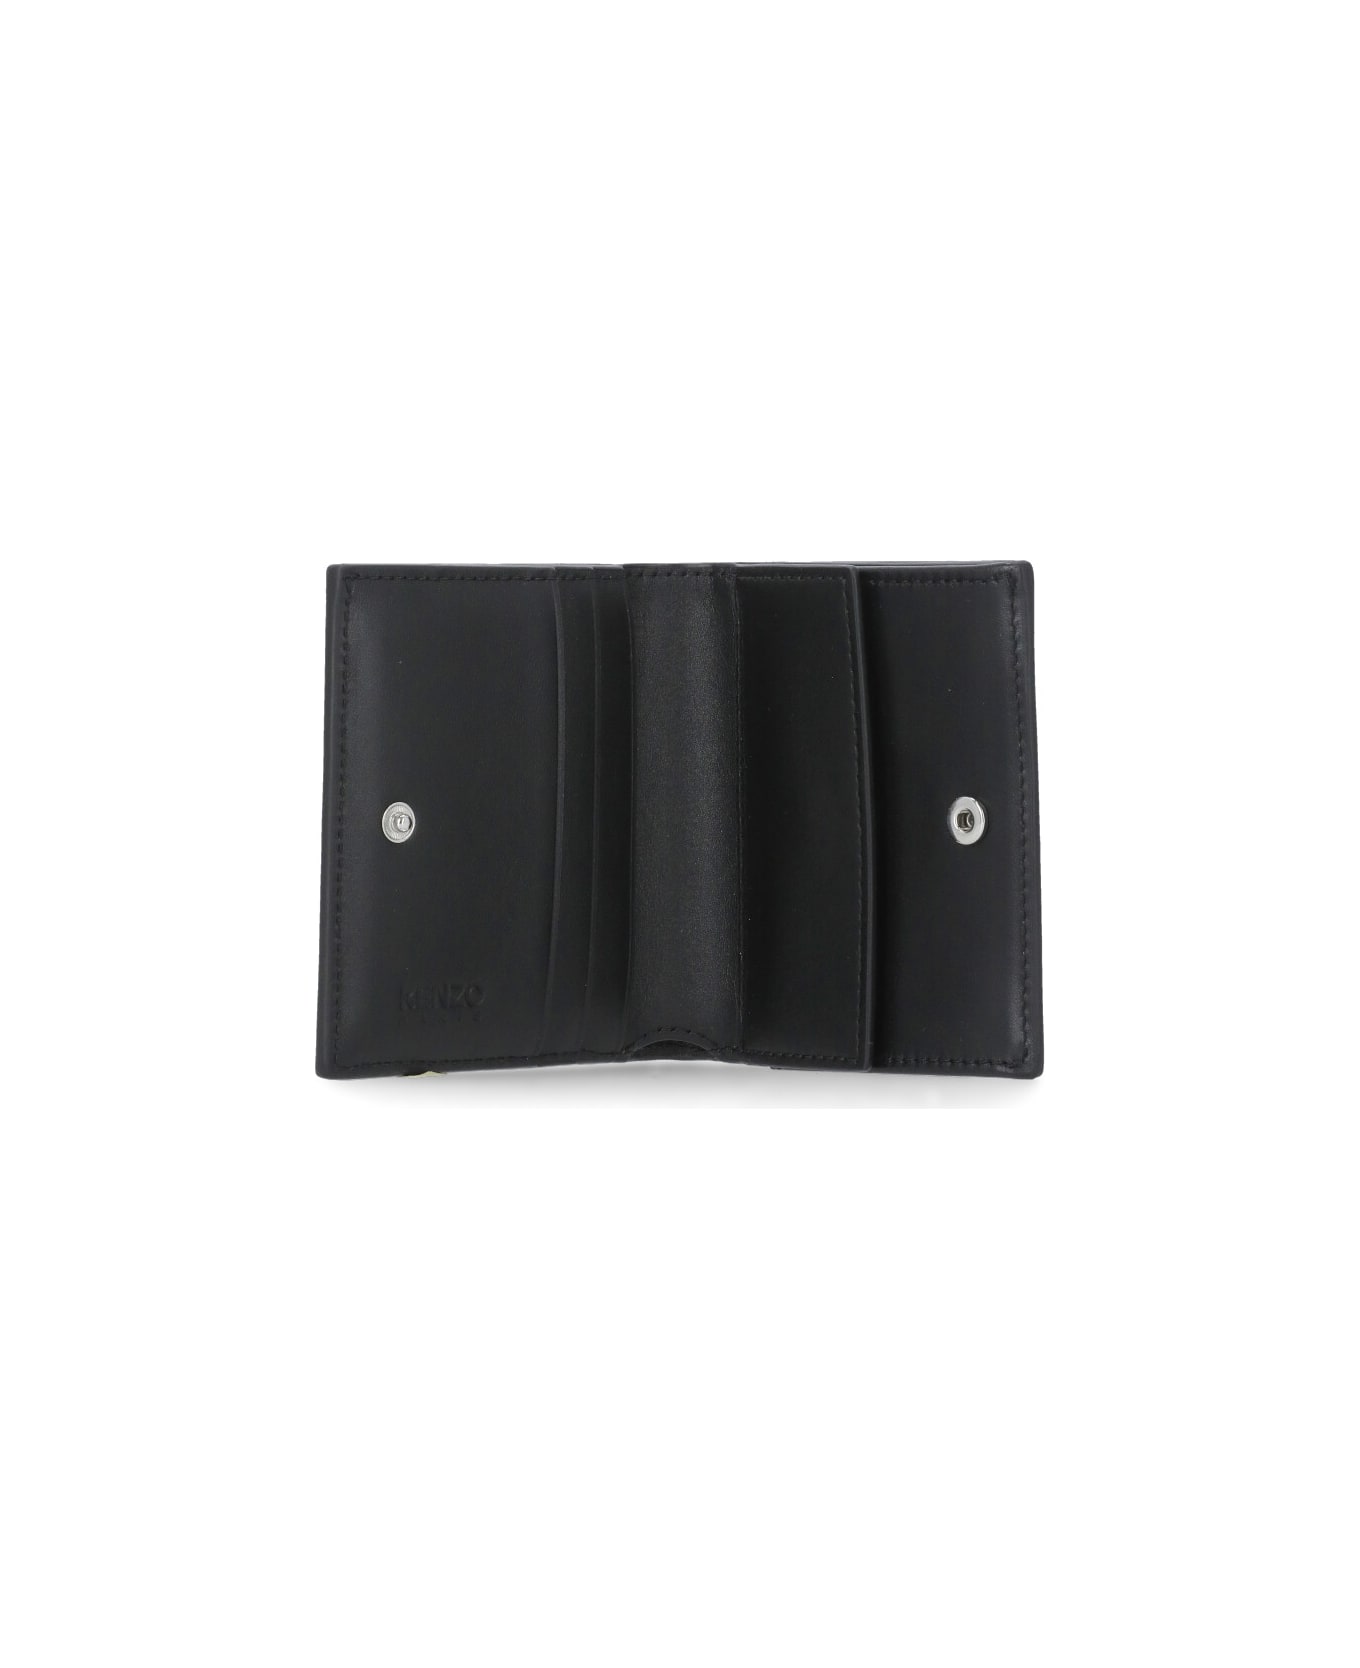 Kenzo Mini Folding Wallet With Varsity Logo - Black